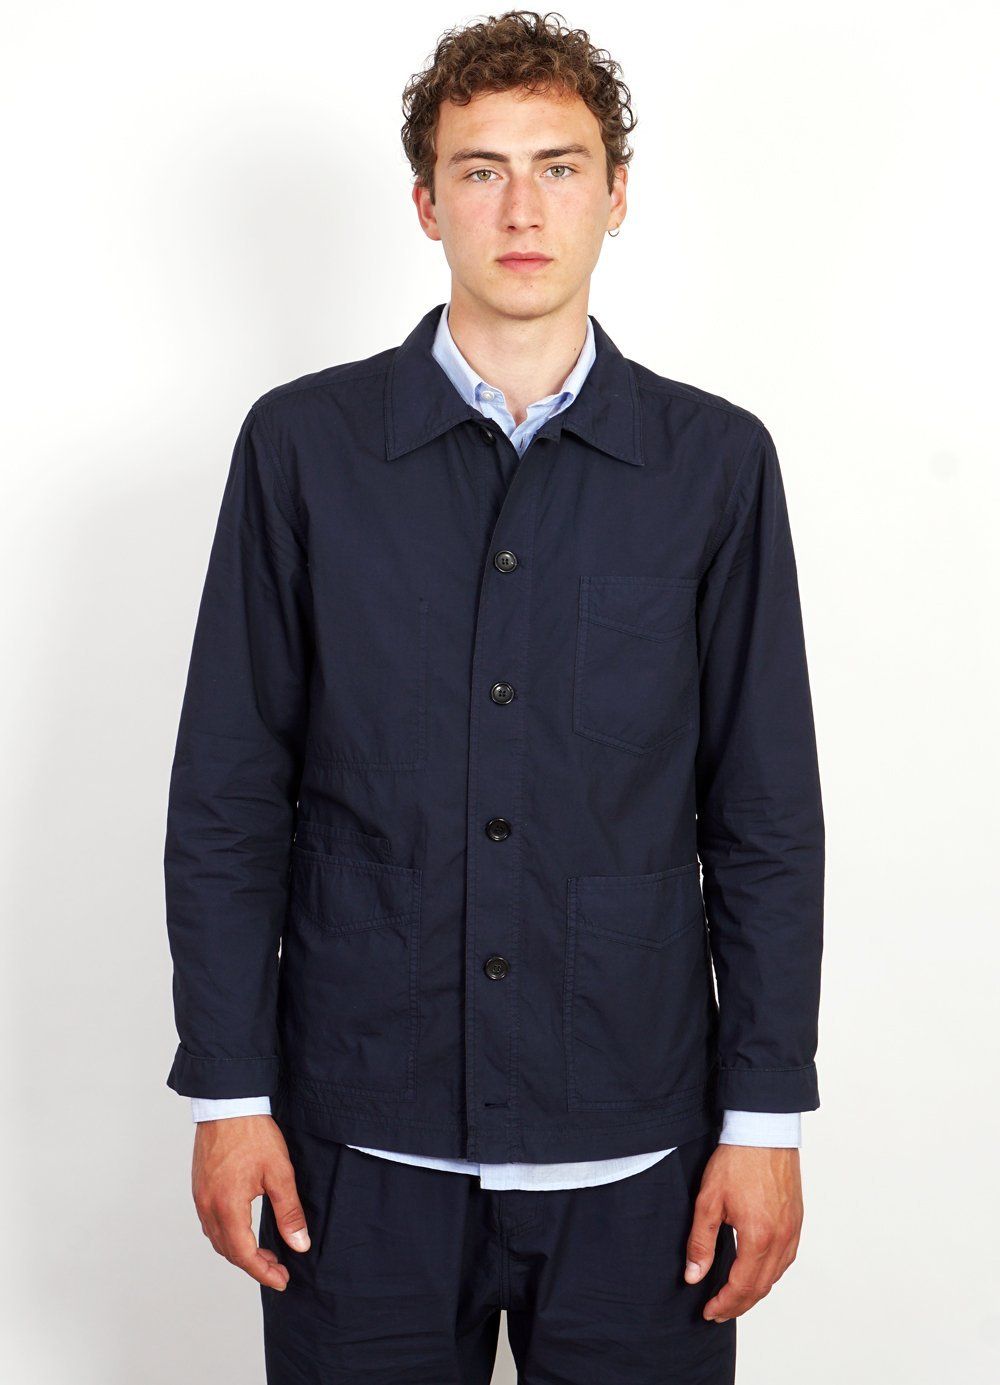 ANDERS | Light Work Jacket | Navy -HANSEN Garments- HANSEN Garments